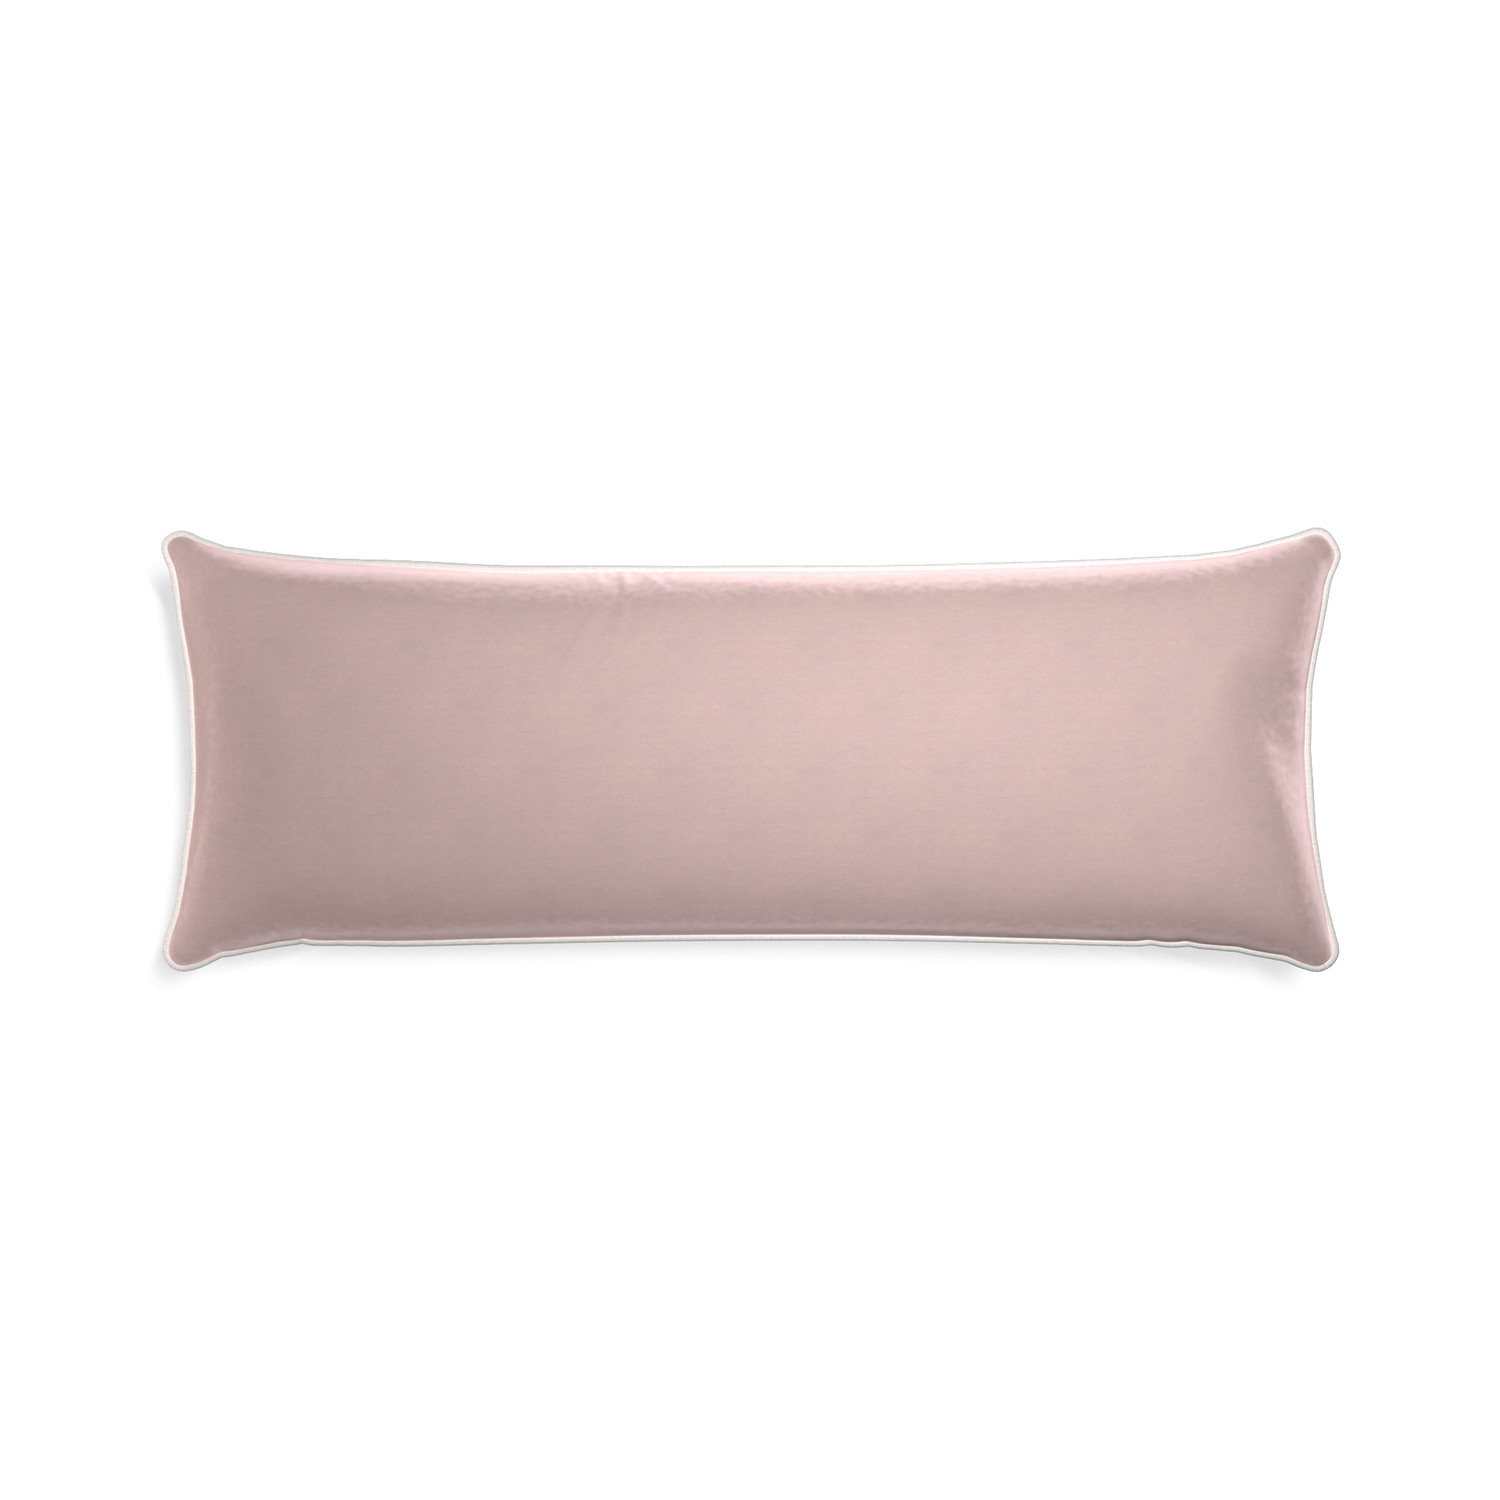 rectangle light pink velvet pillow with white piping 